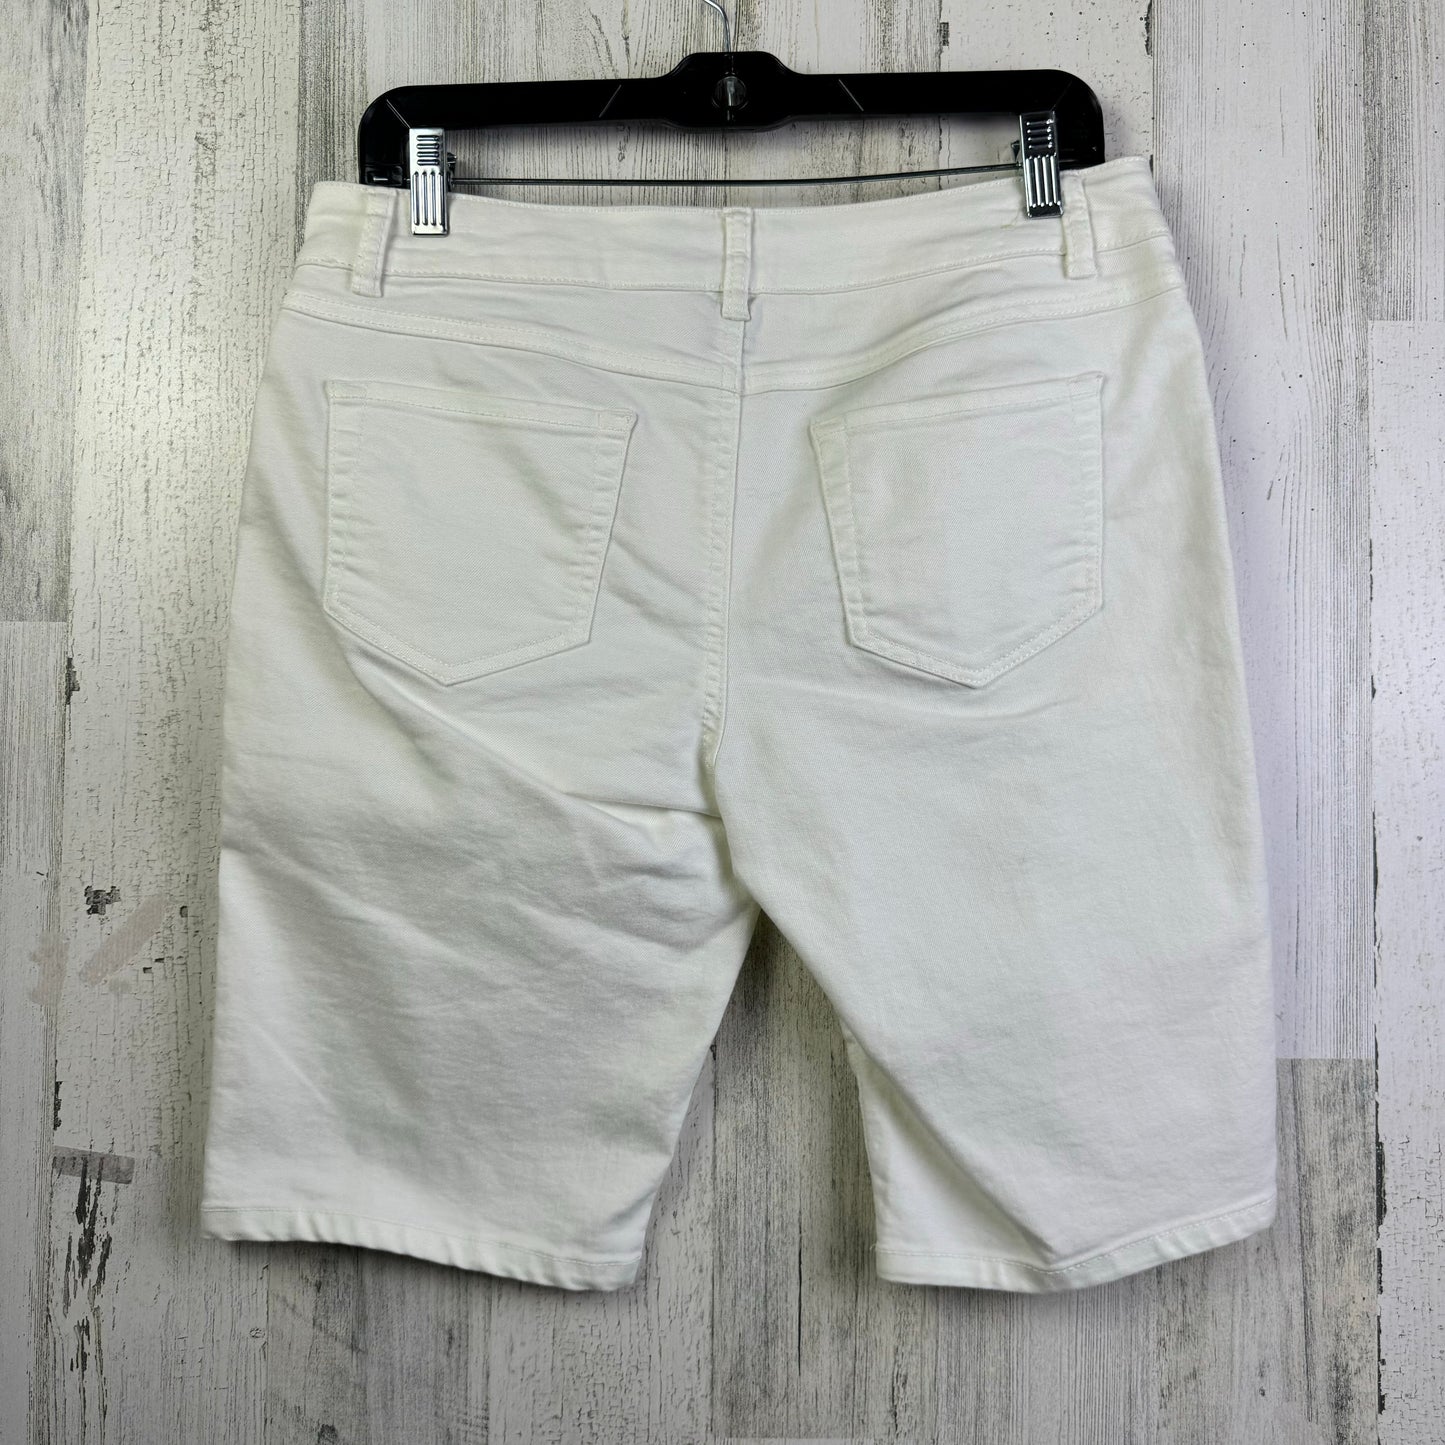 White Shorts D Jeans, Size 8